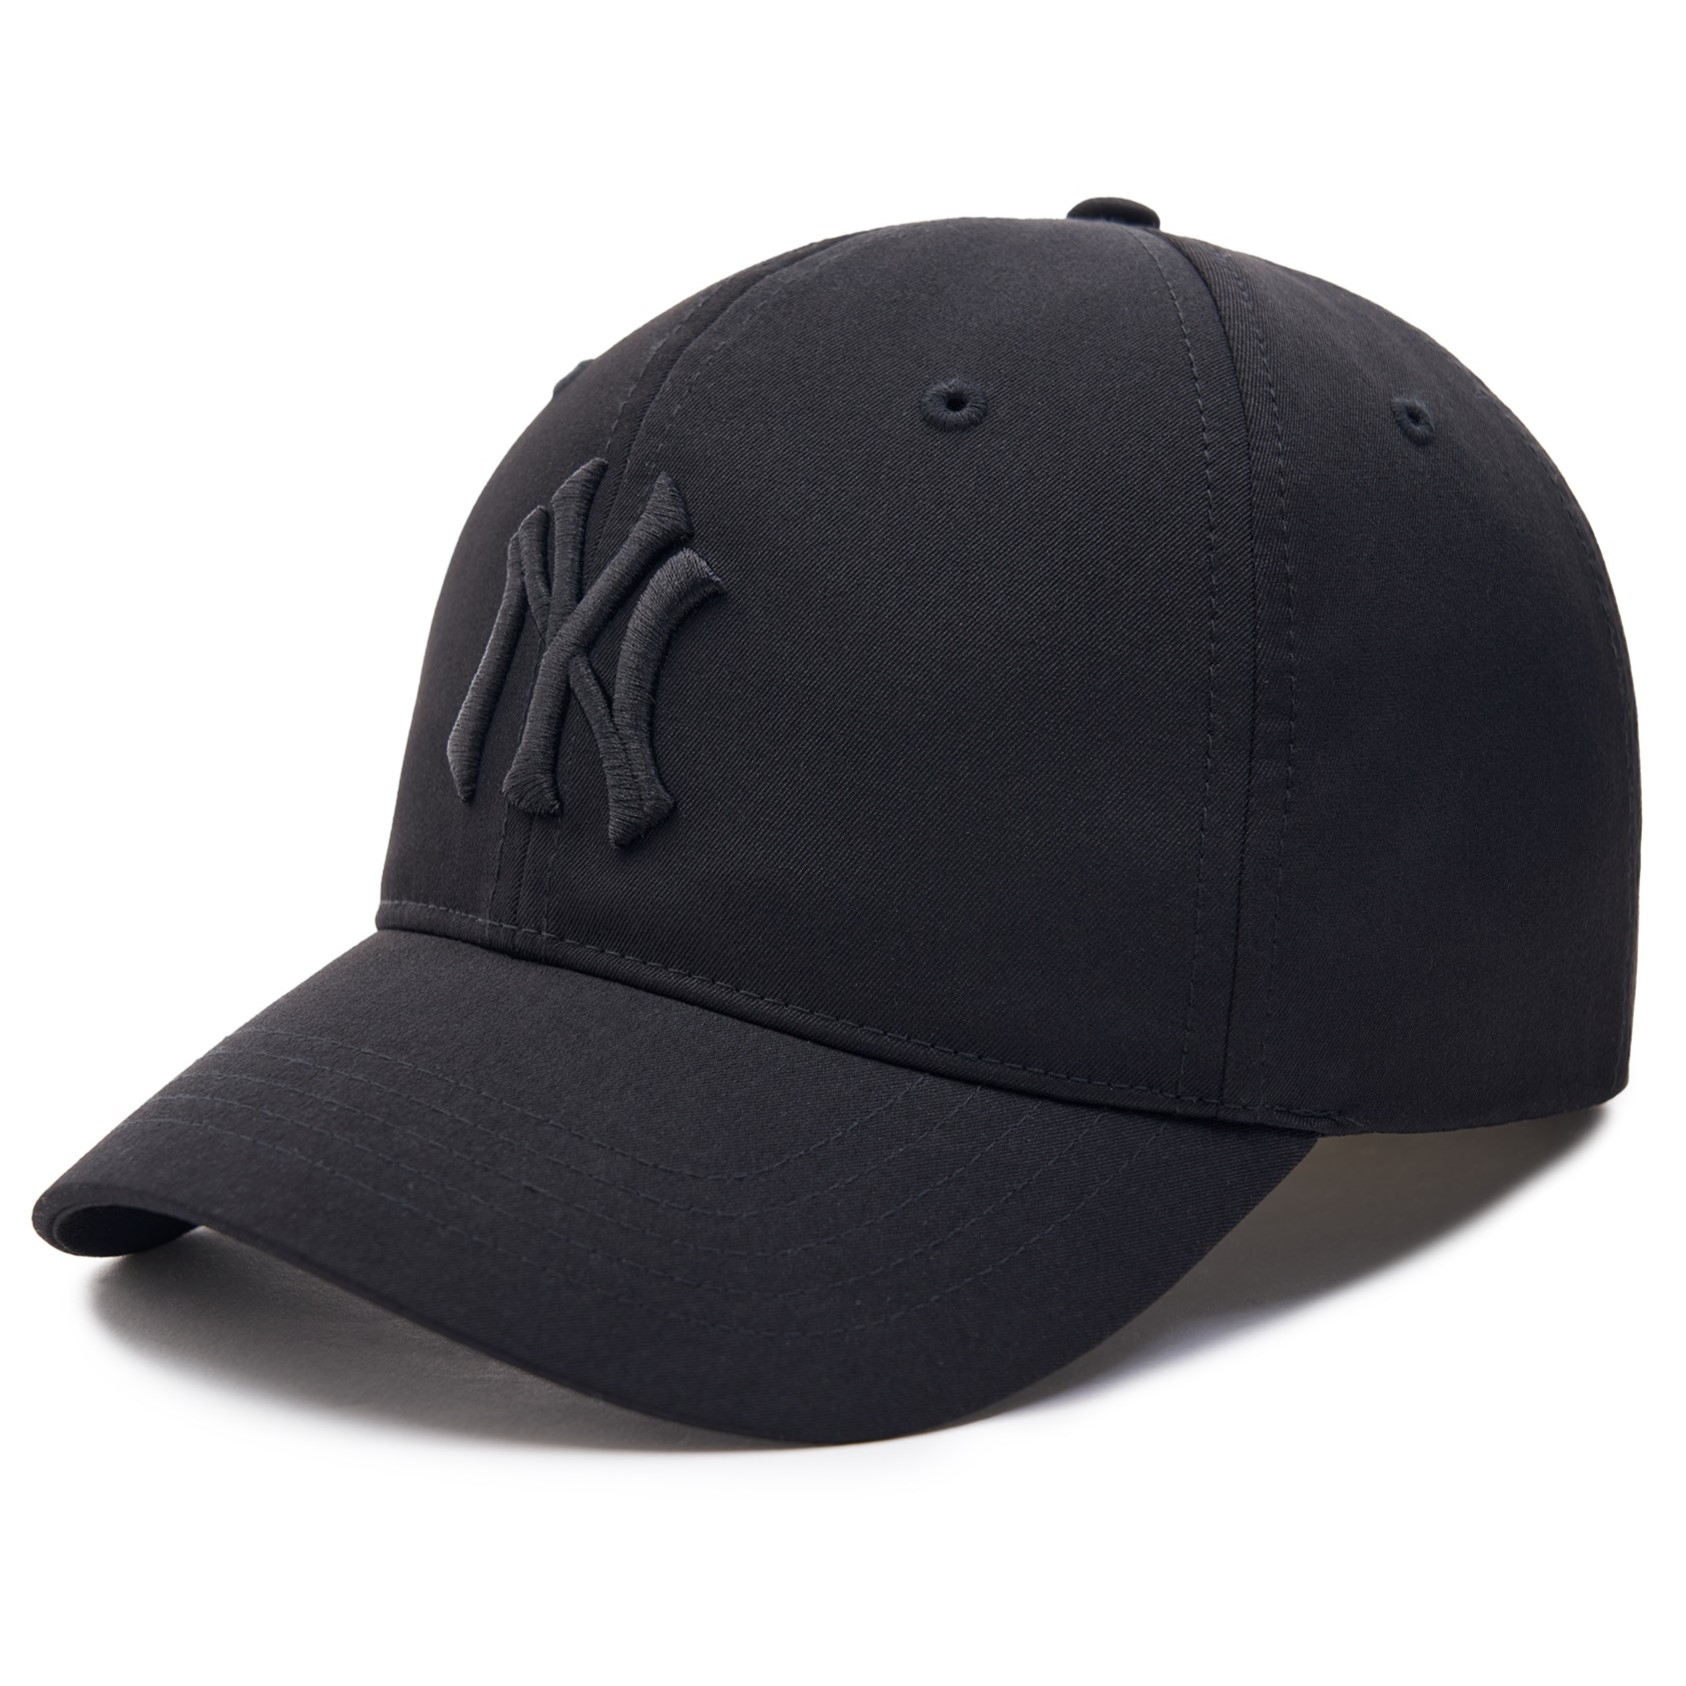 NÓN KẾT MLB NY FIELDER FIT FLEX UNSTRUCTURED BALL CAP NEW YORK YANKEES 3ACP0393N-50BKS 7